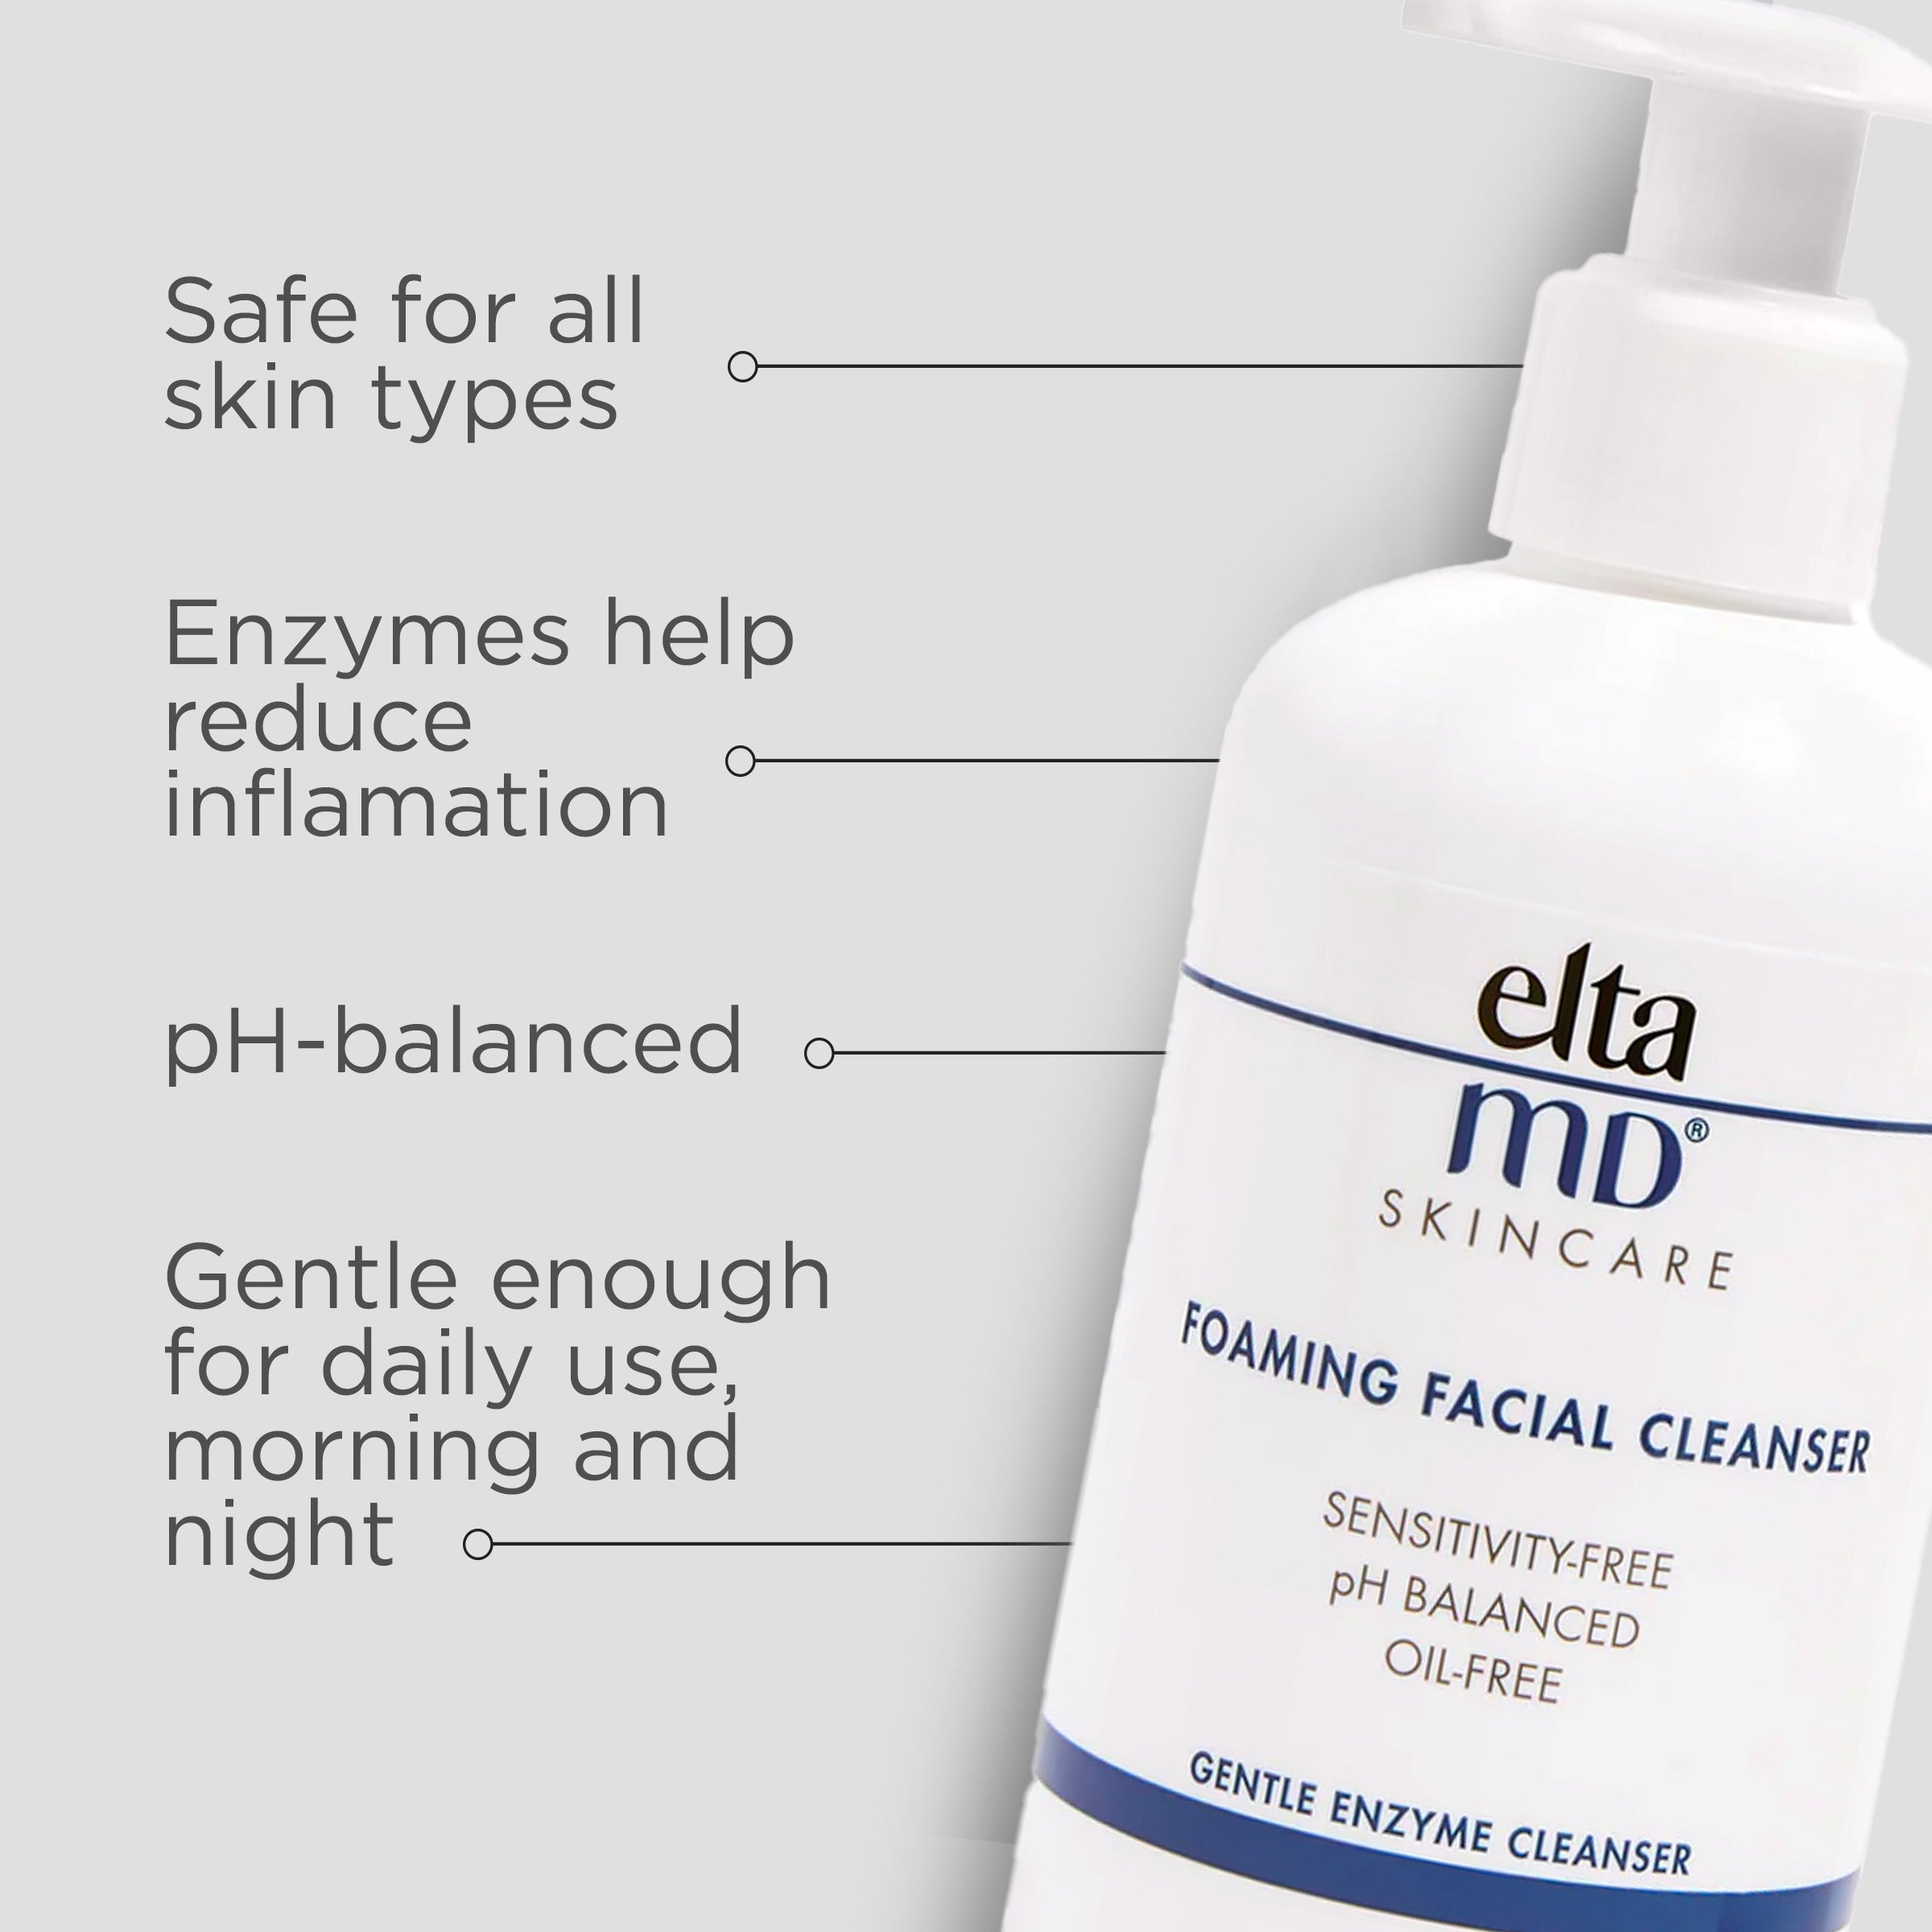 EltaMD Foaming Facial Cleanser (3.38 oz)